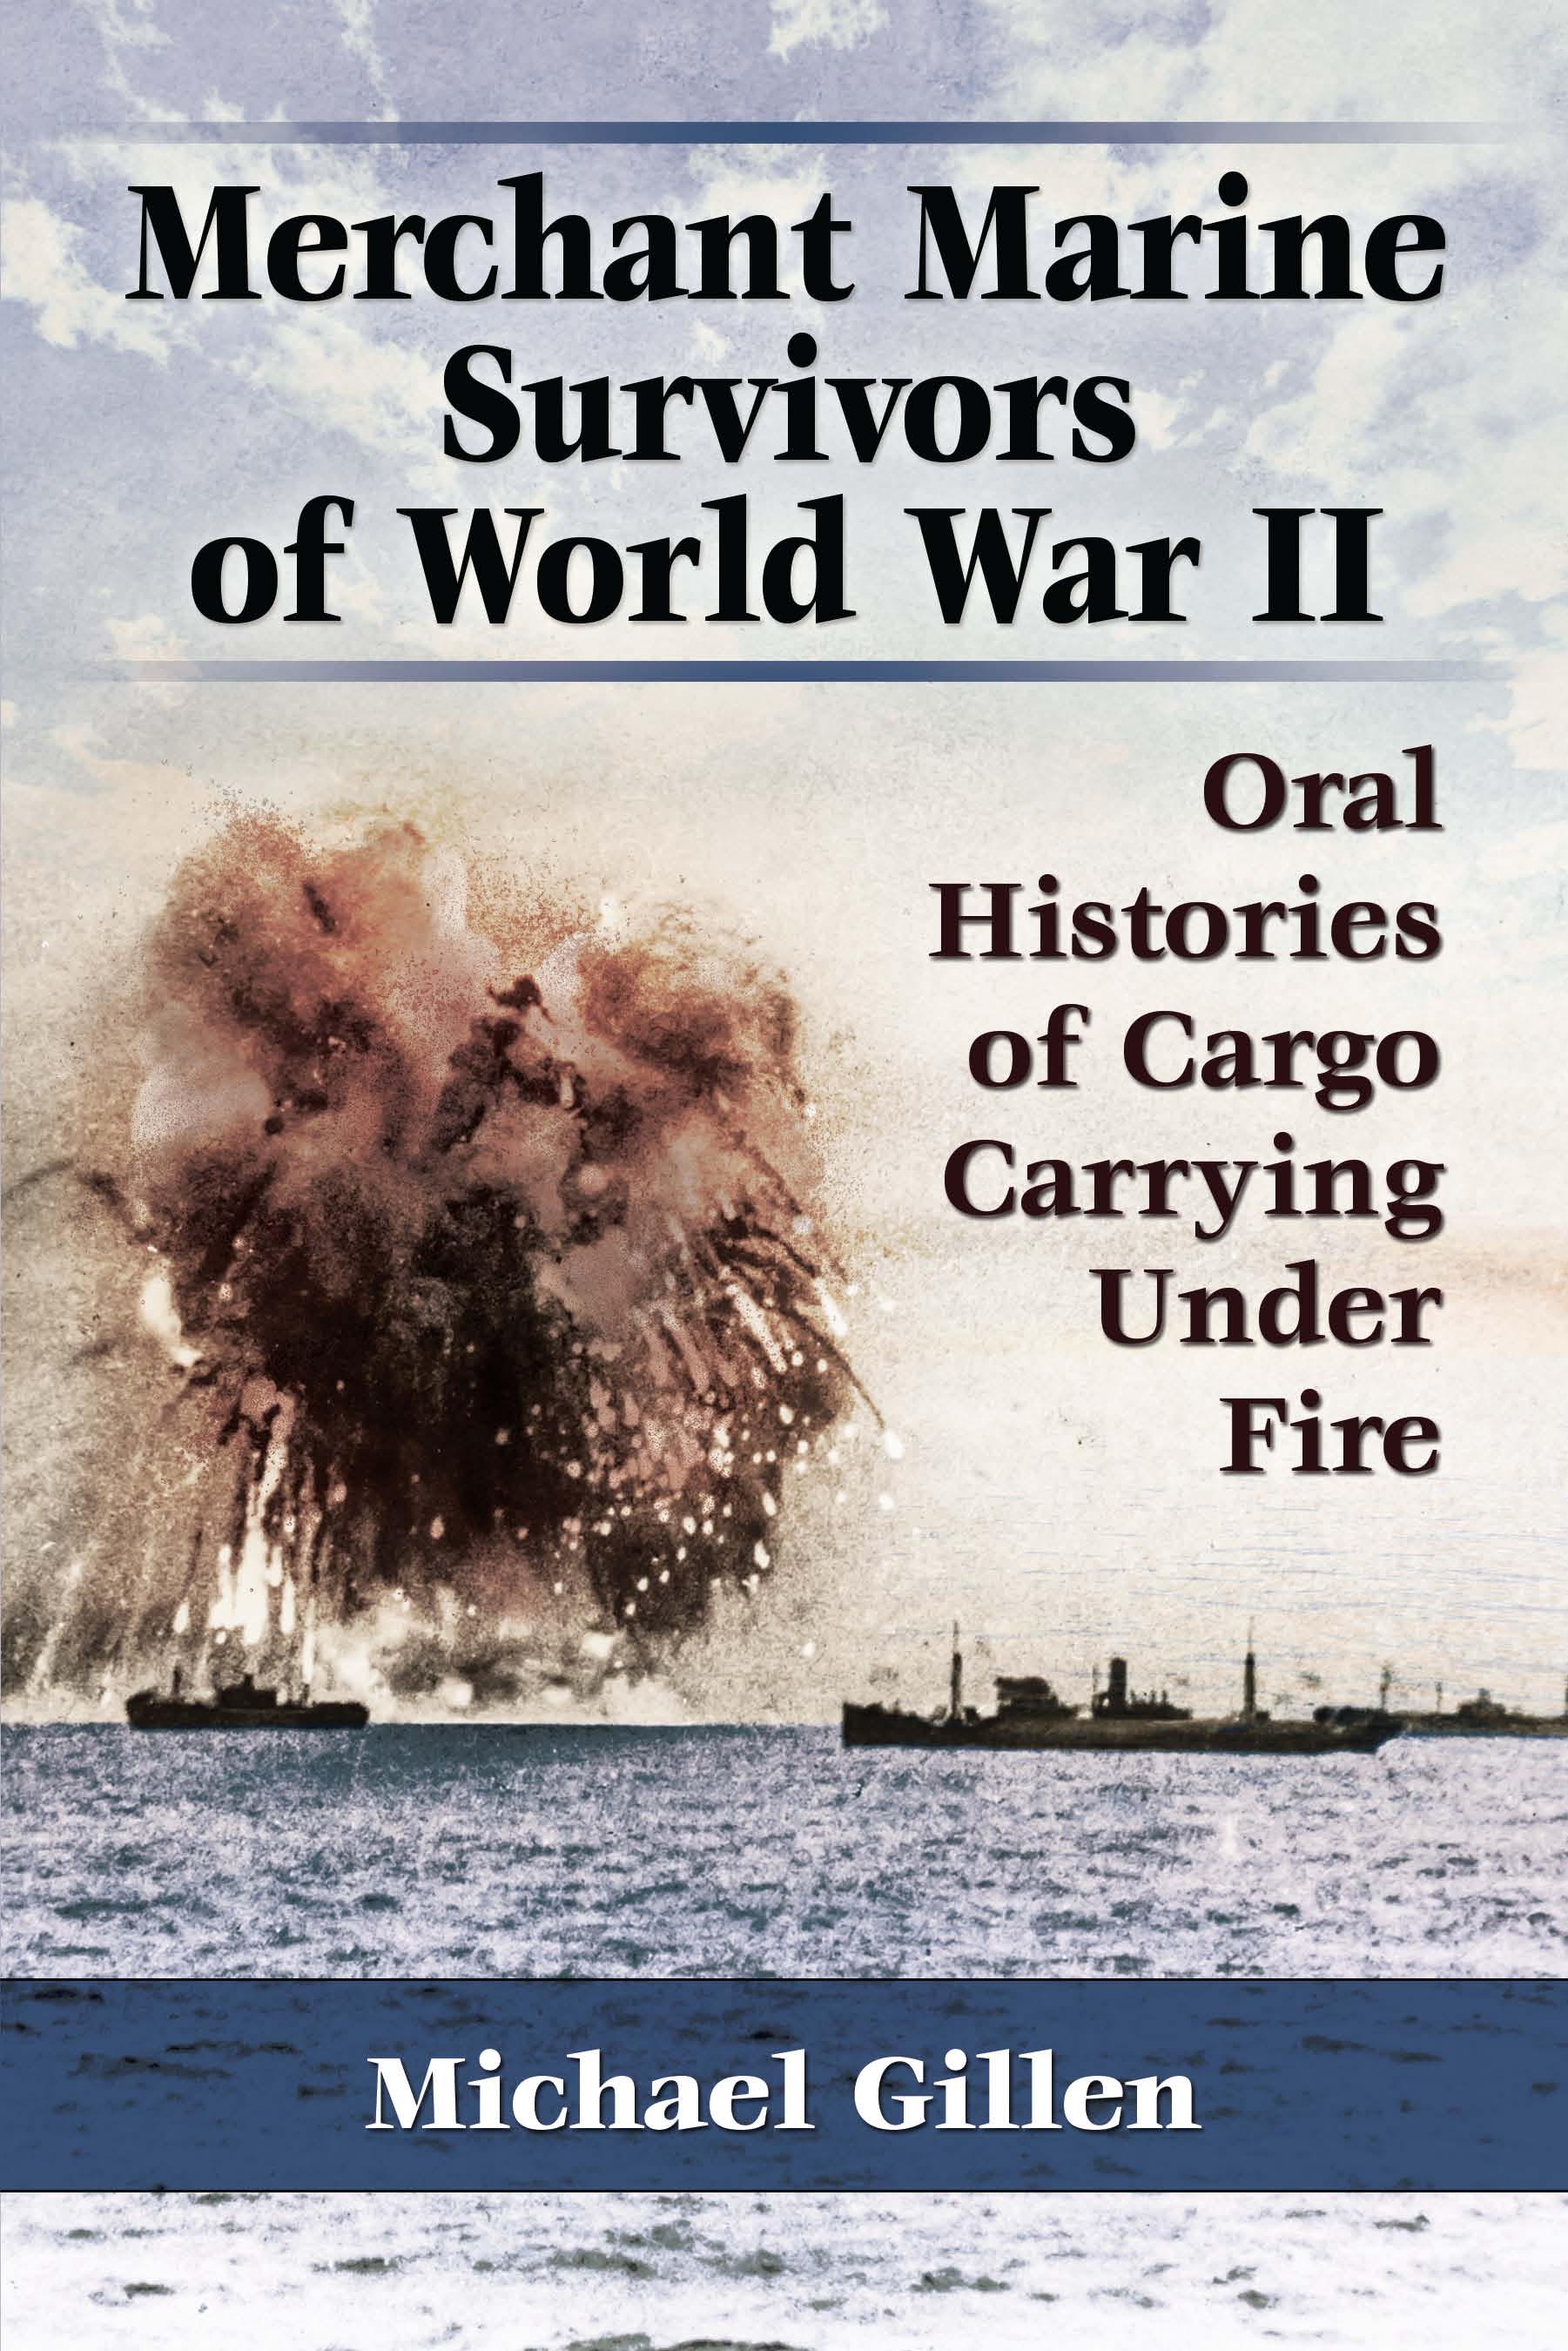 Merchant marine survivors of World War II oral histories of cargo carrying under fire - image 1